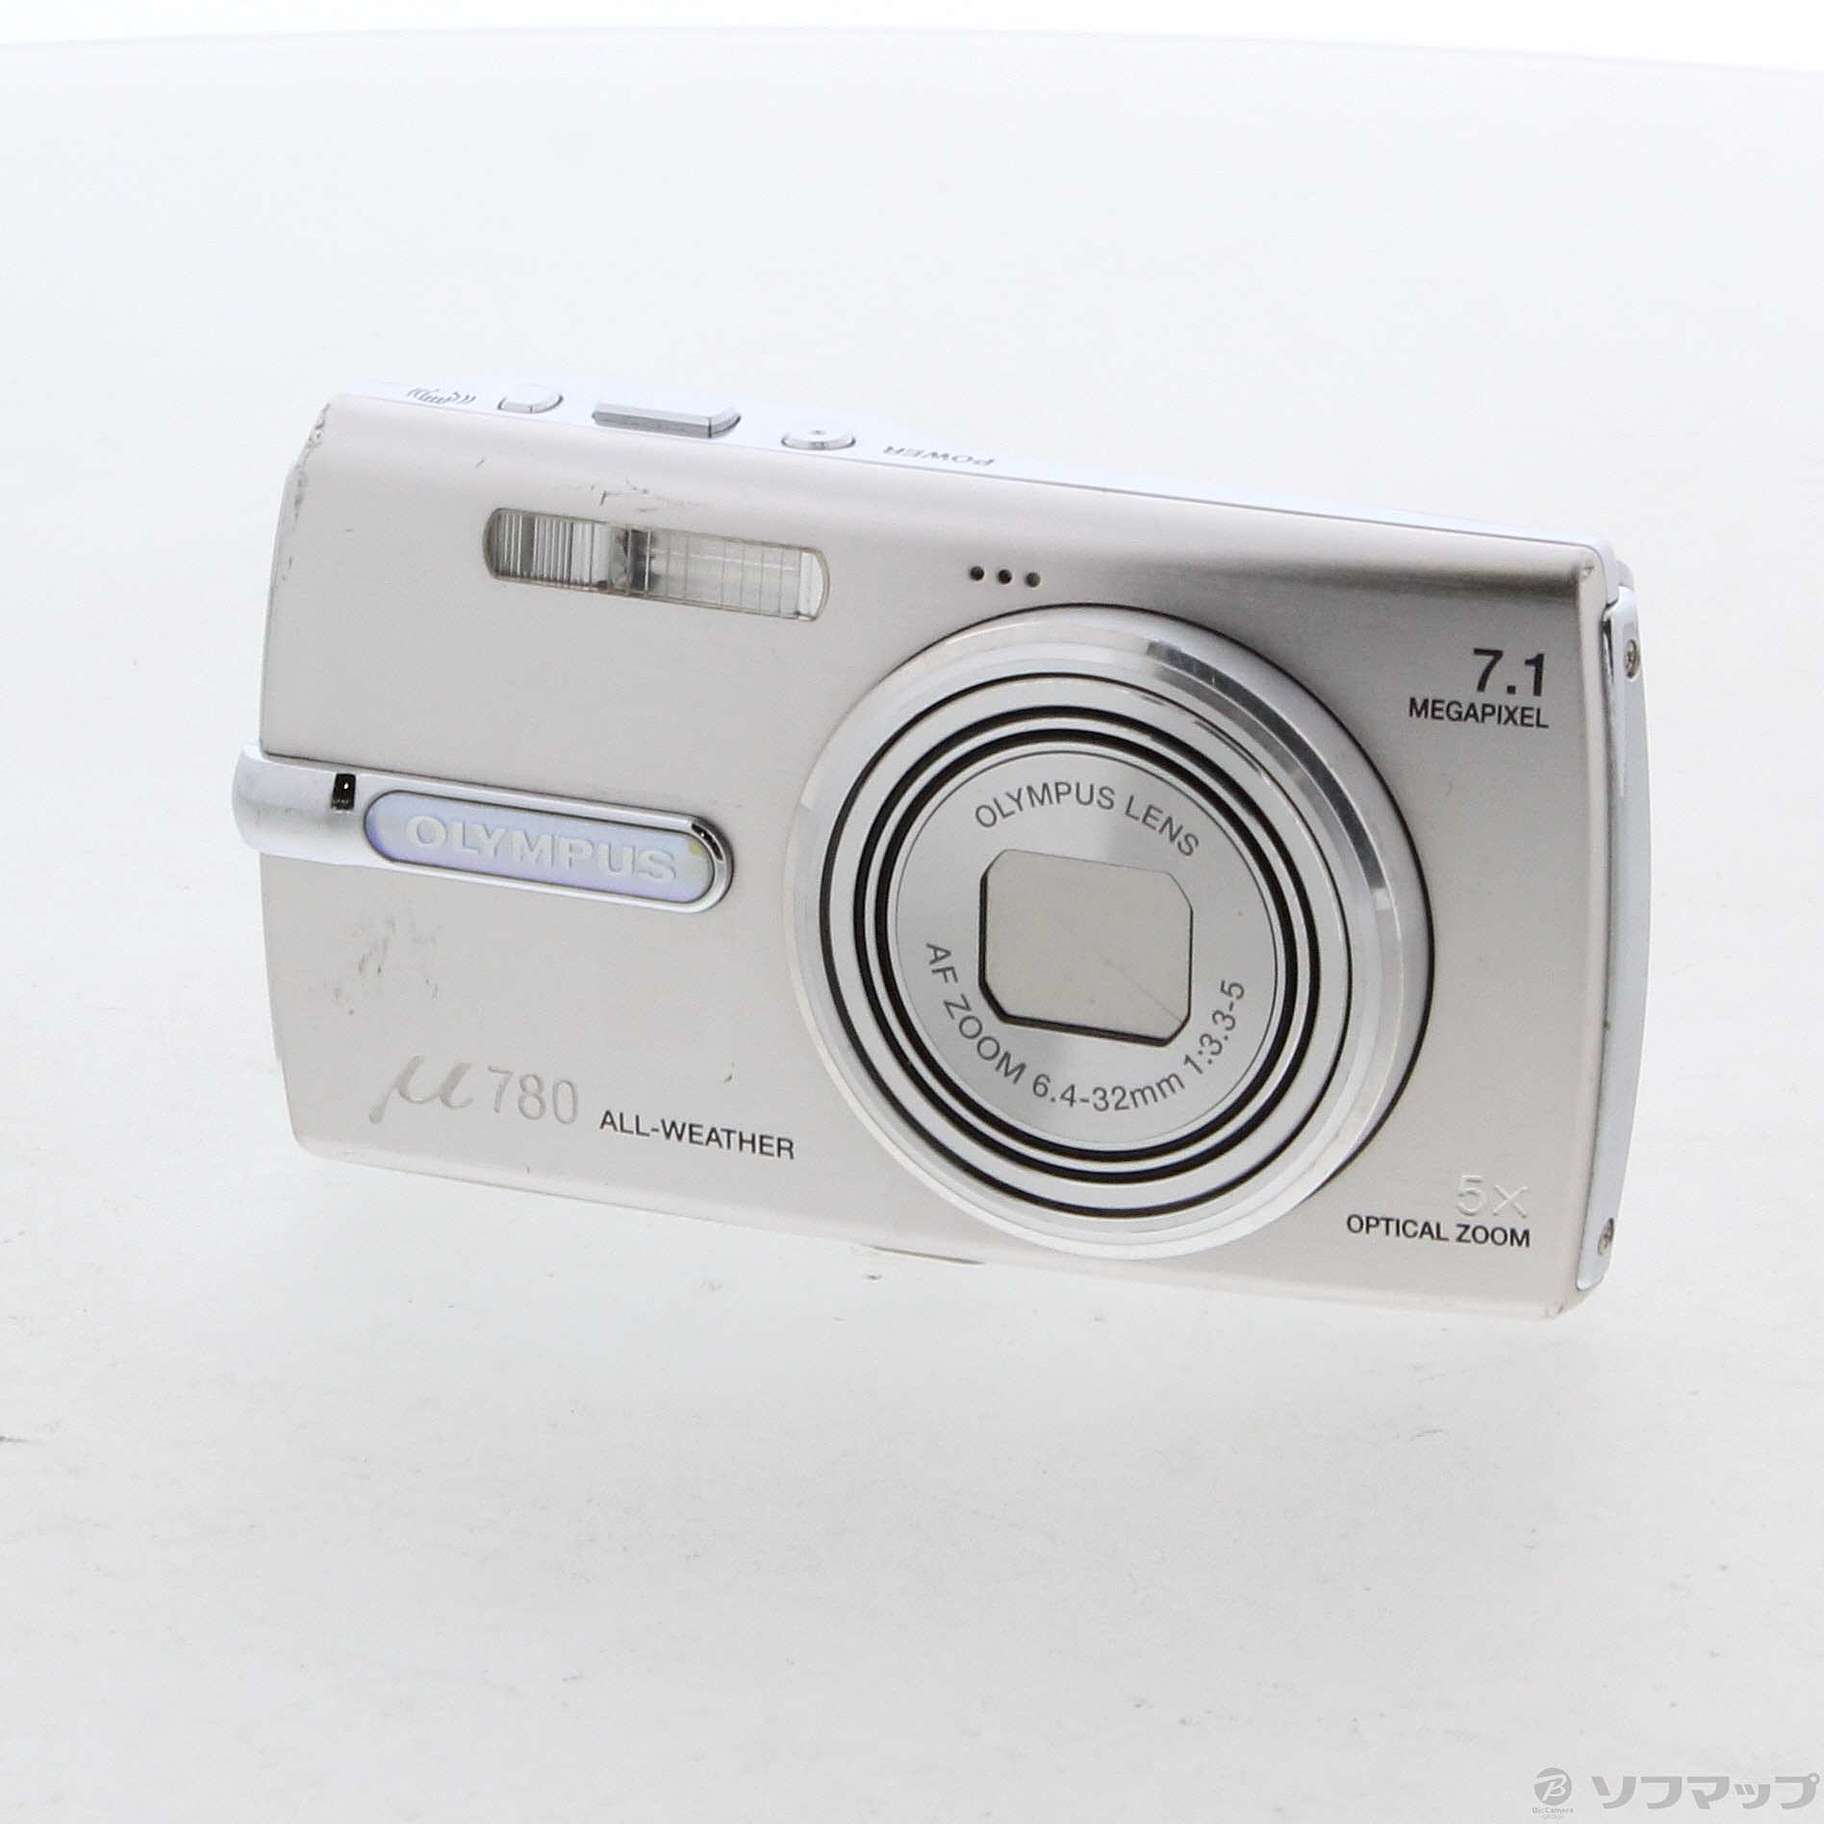 OLYMPUS μ-780 デジカメ - デジタルカメラ